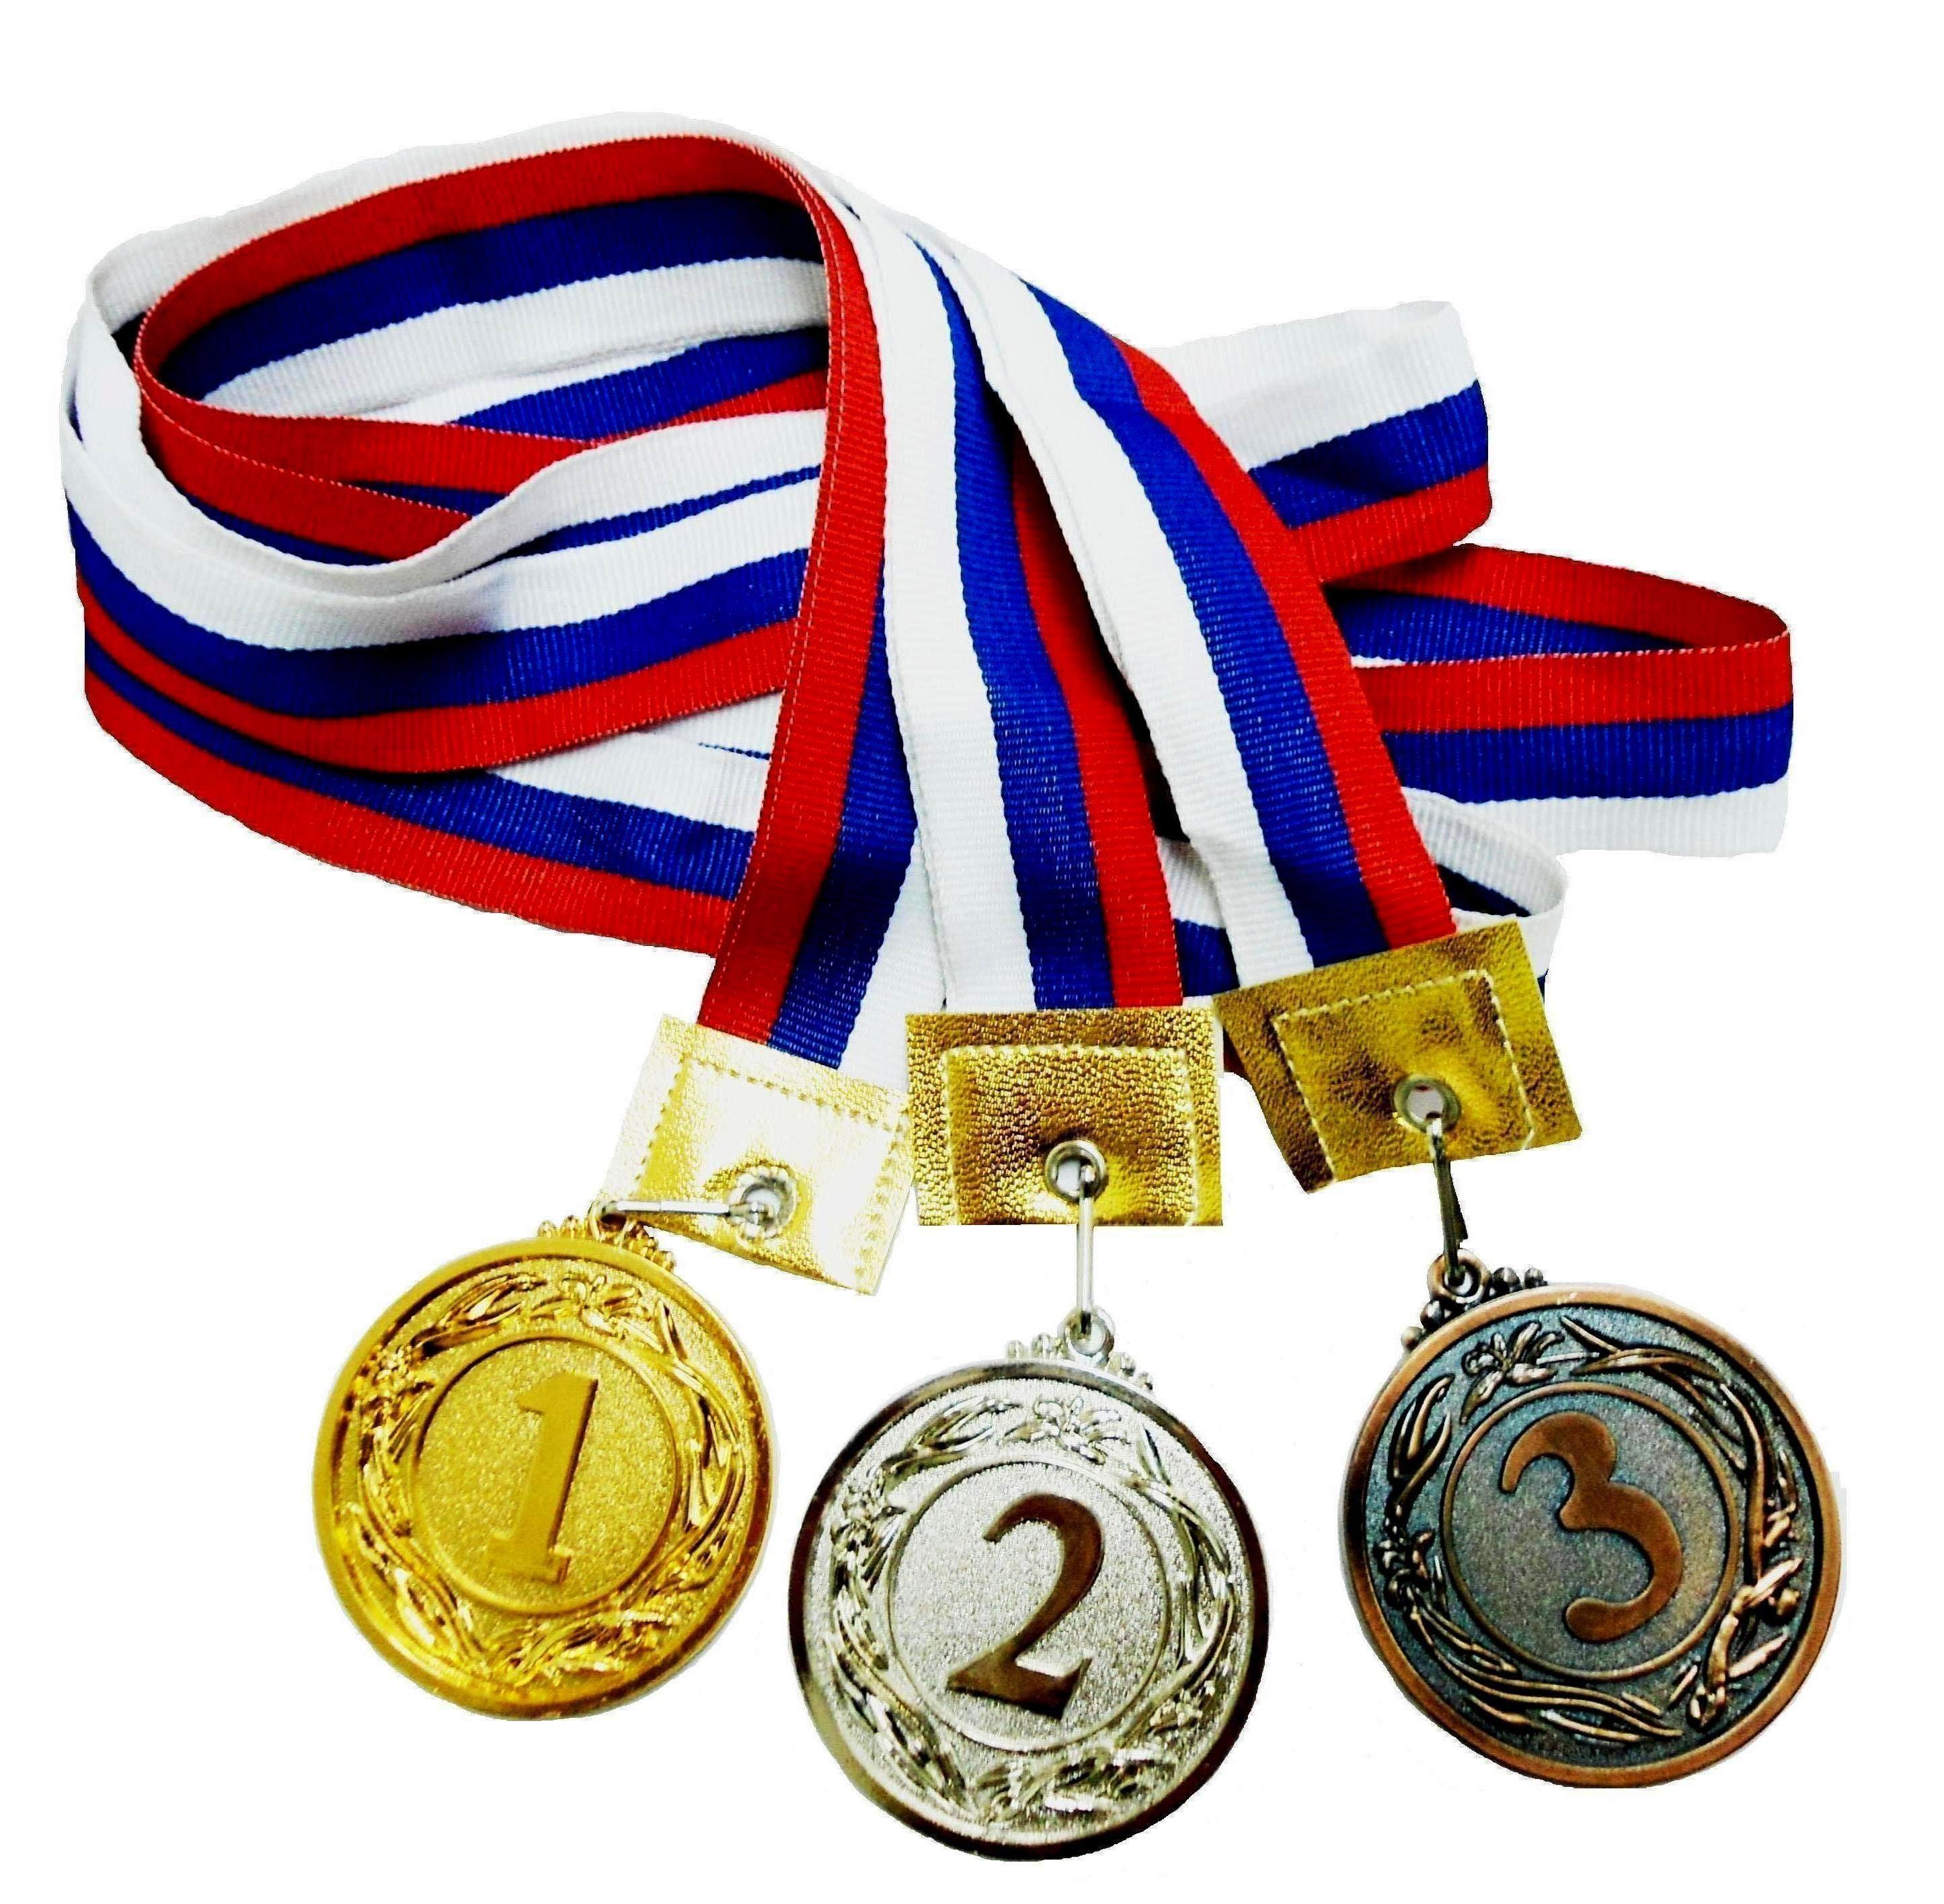 Sports medals. Медали спортивные. Медали наградные спортивные. Спортсмен с медалью. Медаль спорт.